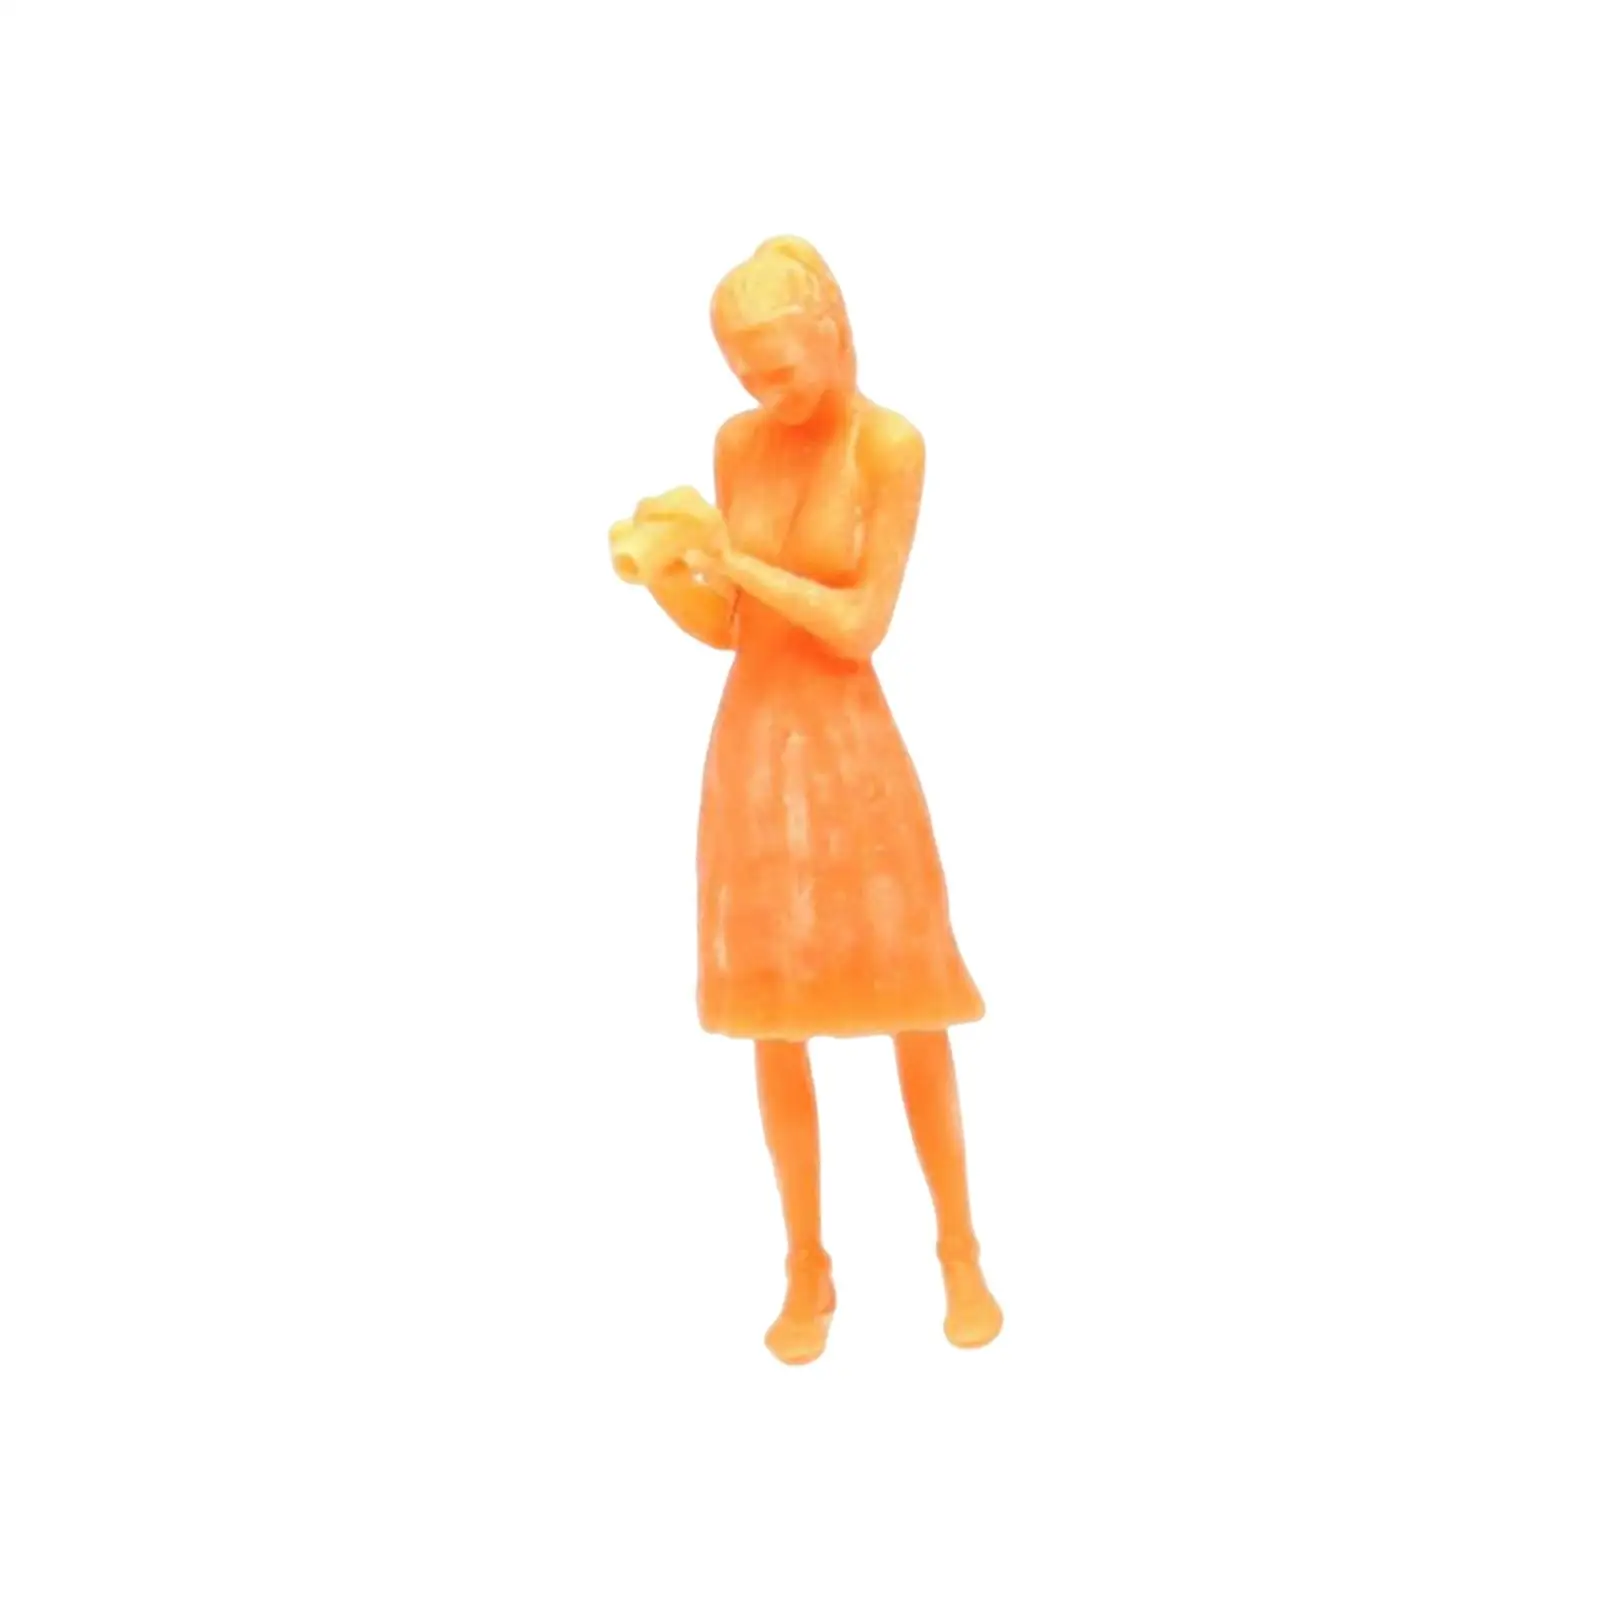 1/64 Figures People Model Miniature People Model Movie Props Simulation Figurines 1/64 Scale Model People Figures Diorama Layout